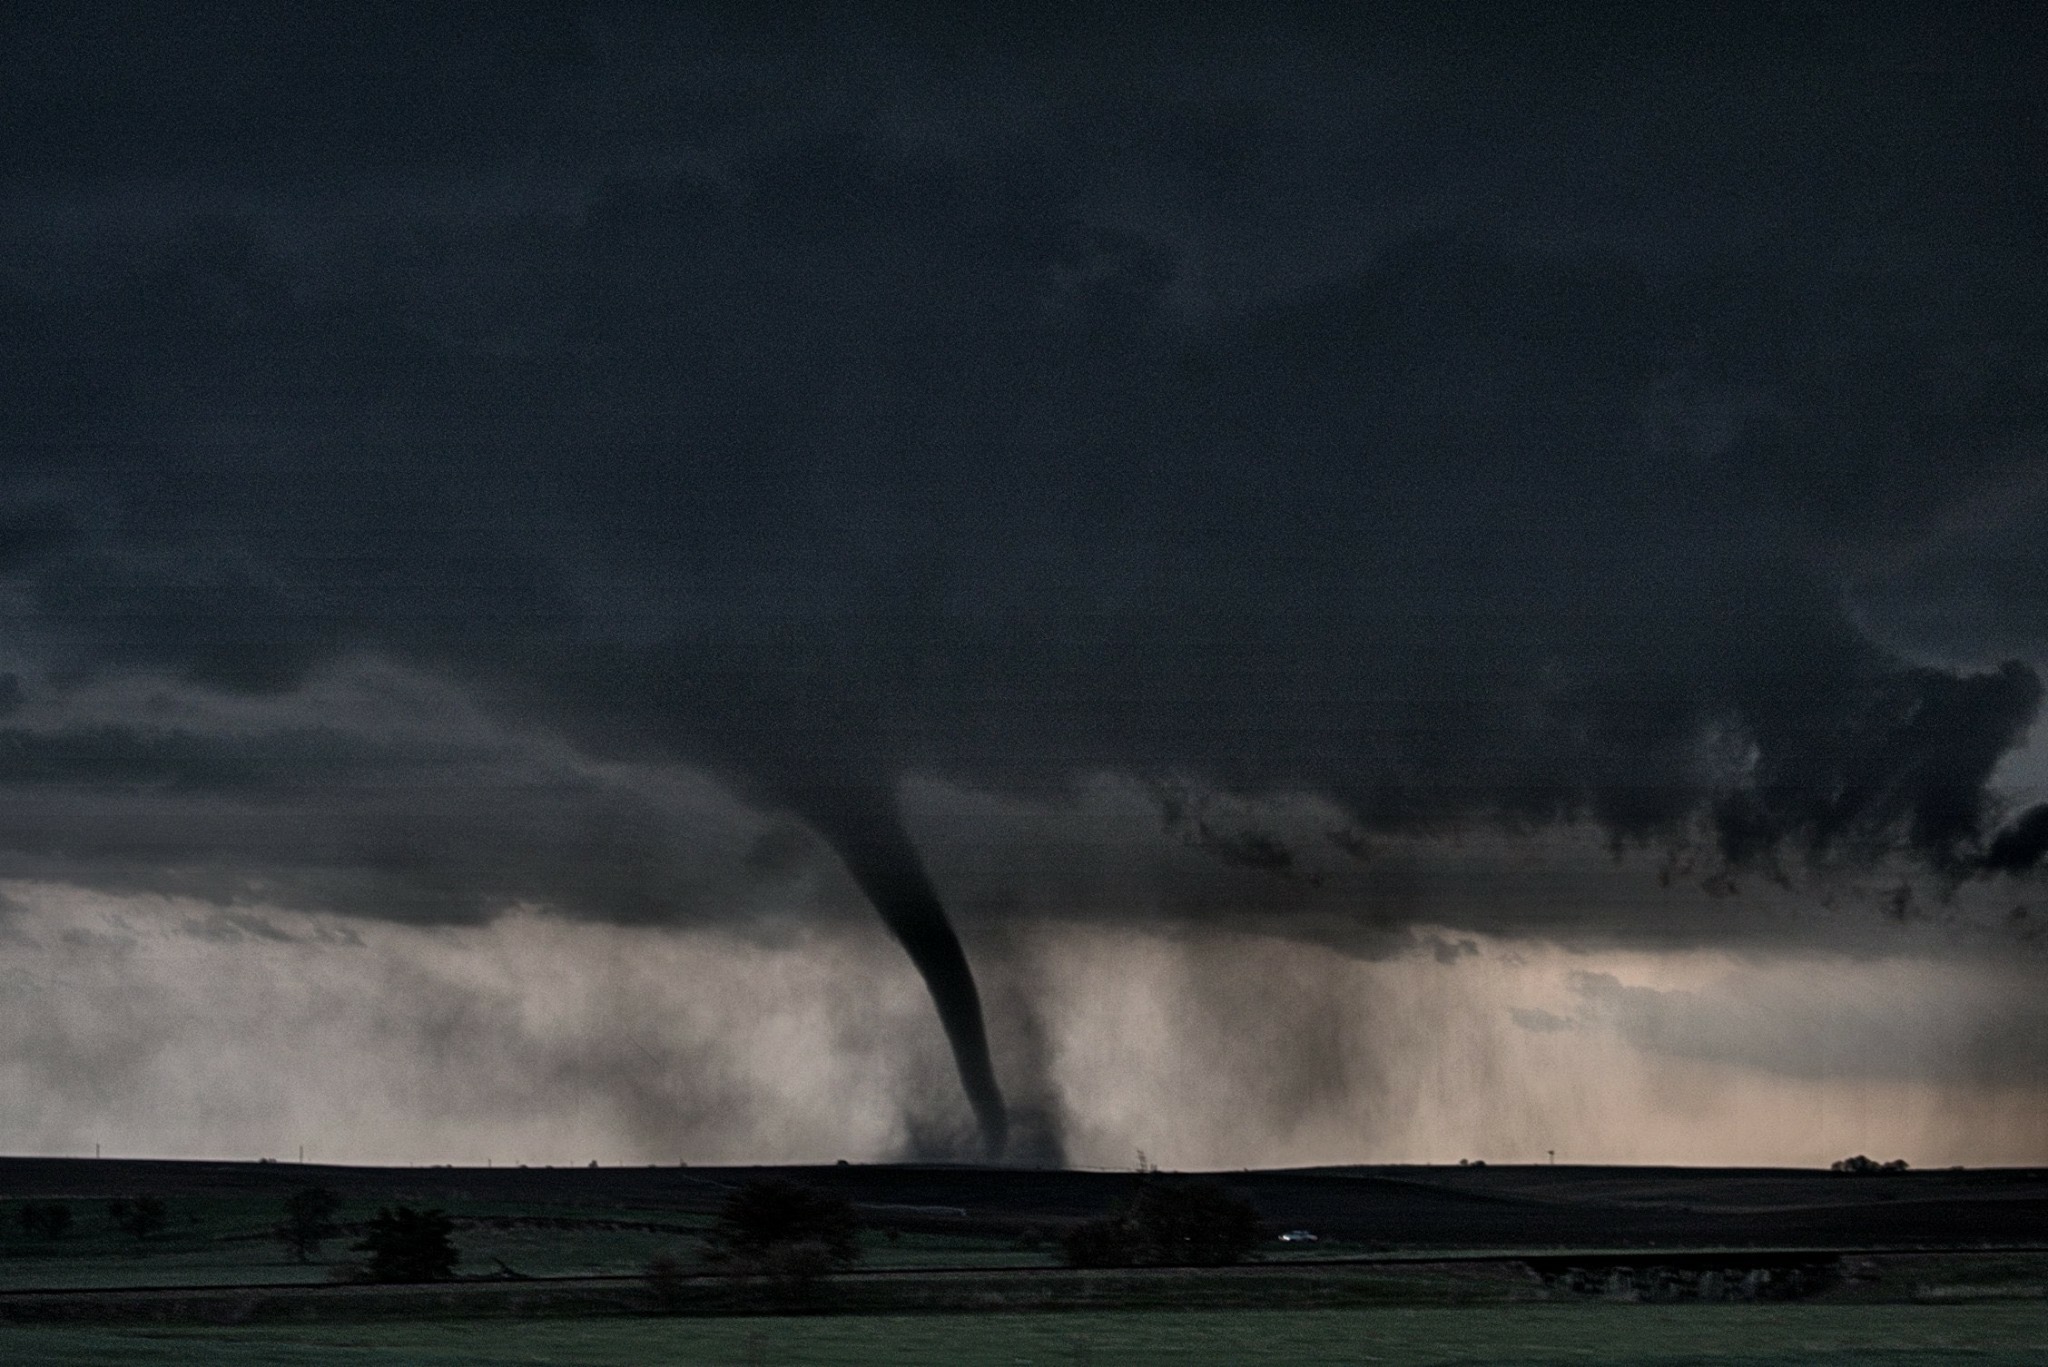 A tornado touching down in a field. 